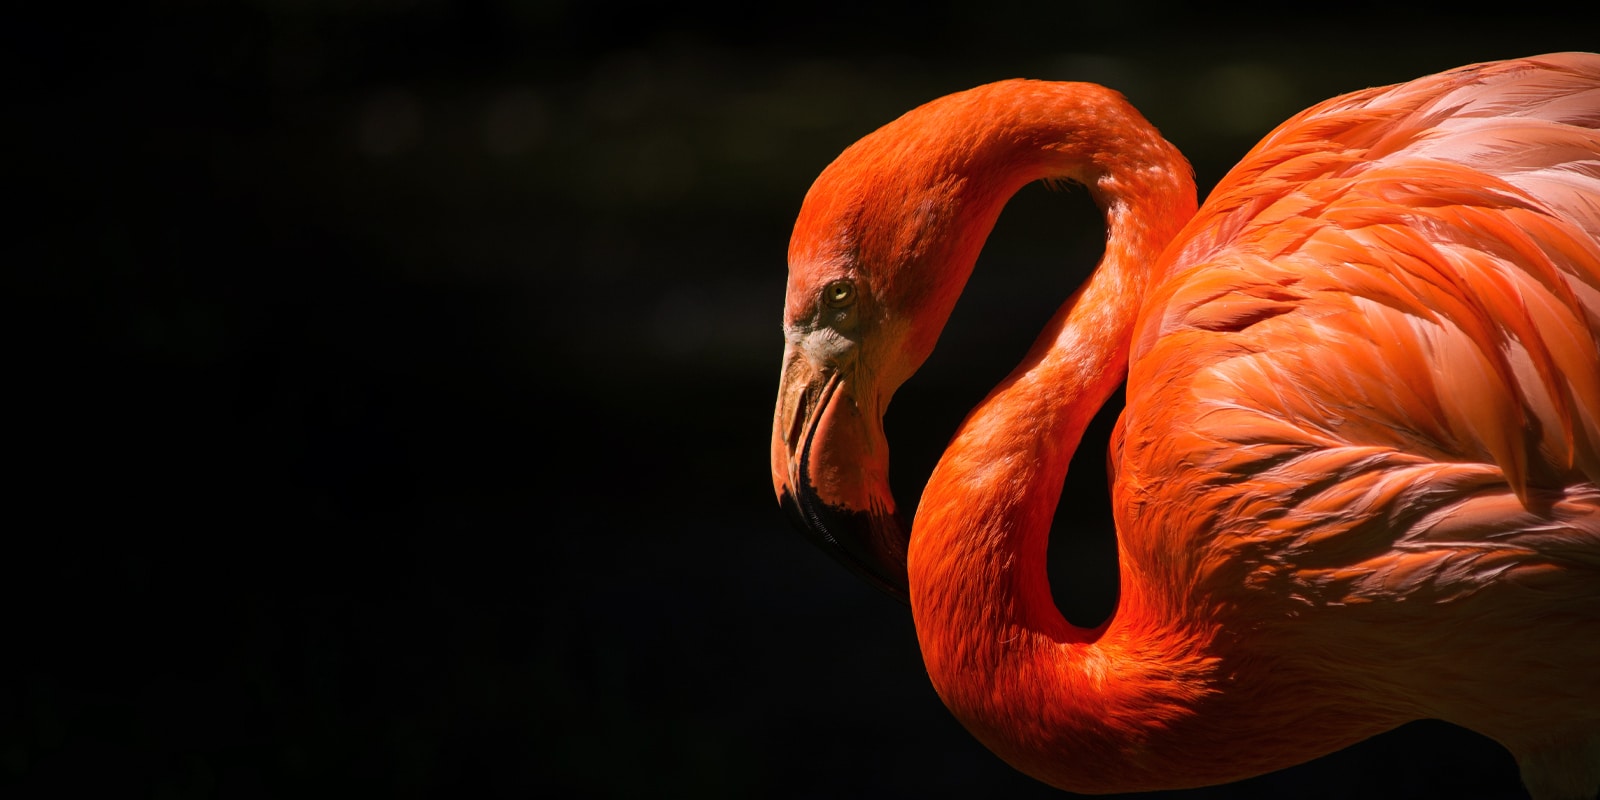 An image of a flamingo